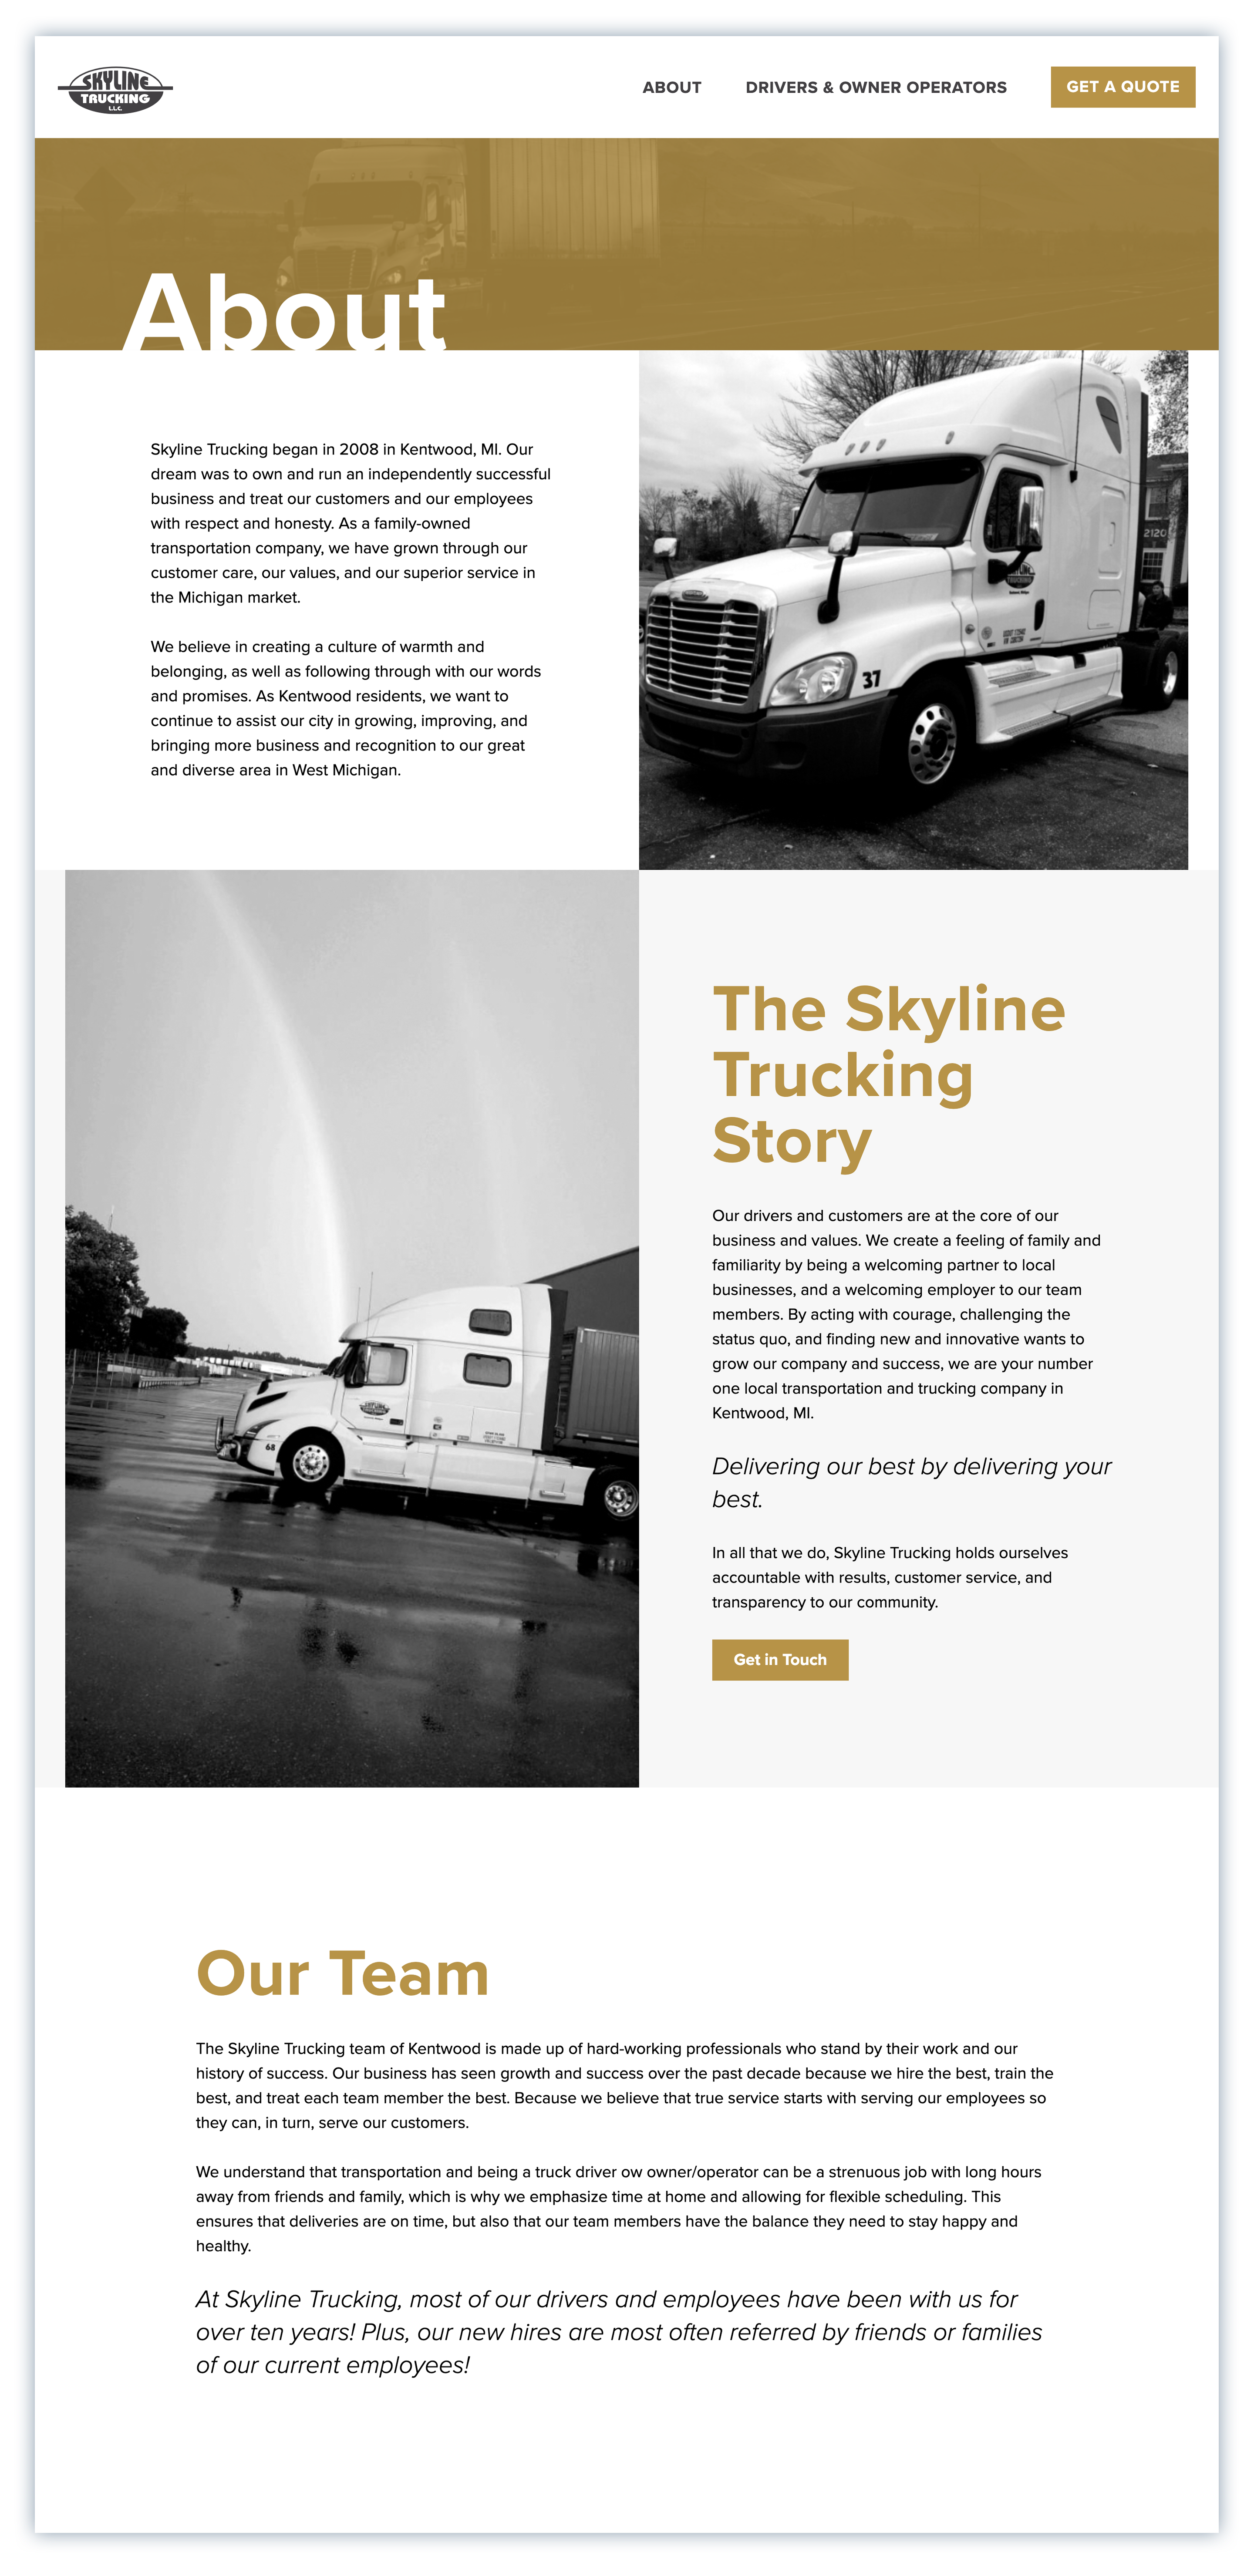 skyline trucking web design screen capture